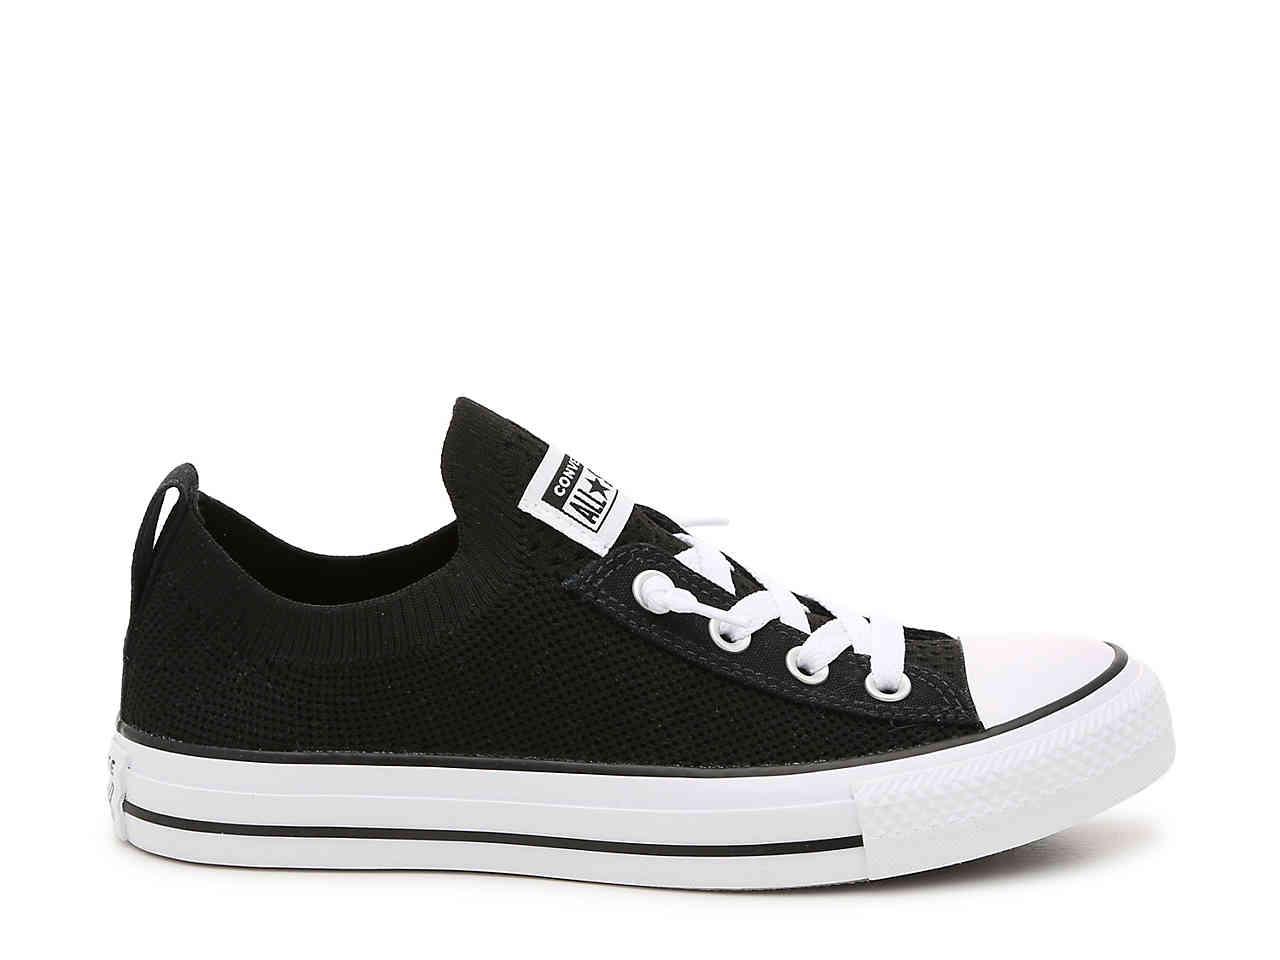 Converse Chuck Taylor All Star Shoreline Knit Slip-on Sneaker in Black ...